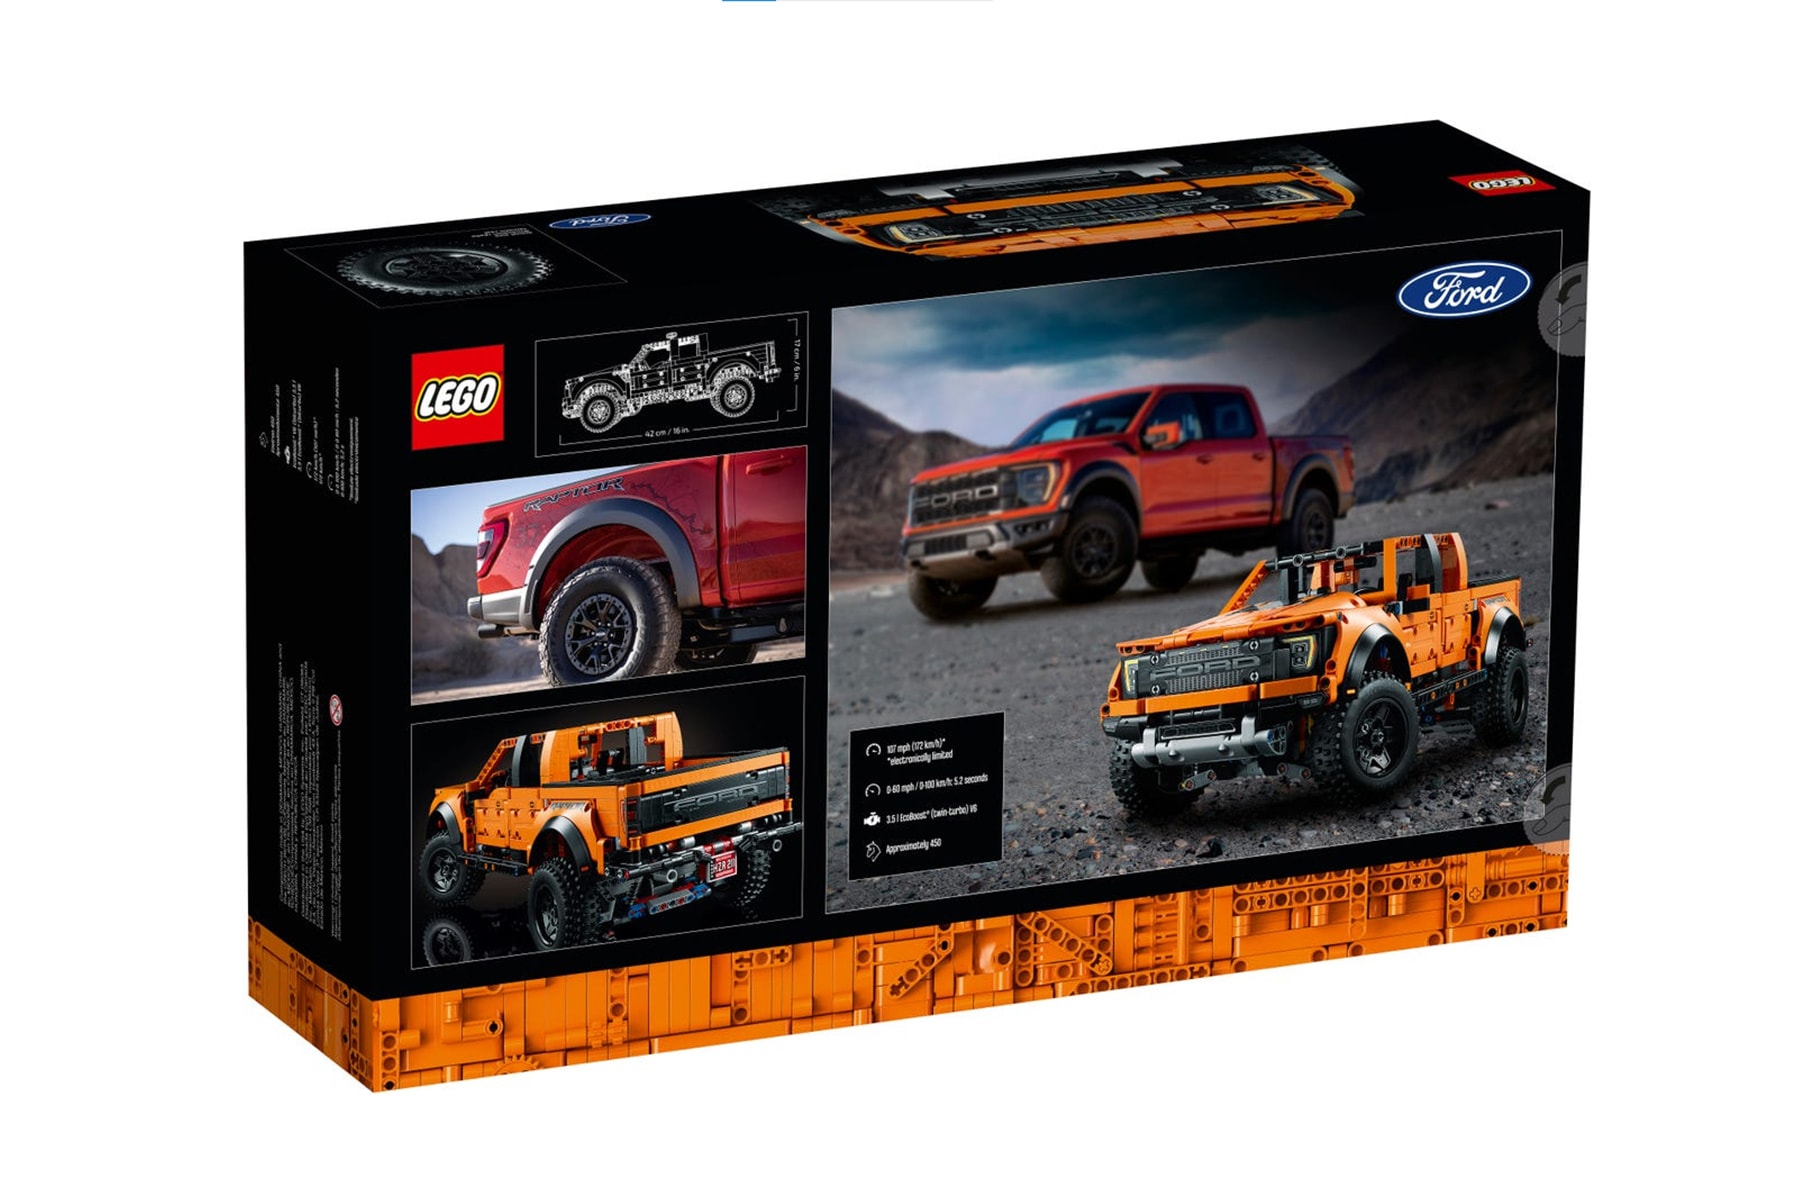 LEGO Technic 實體化 Ford F-150 Raptor 積木模型